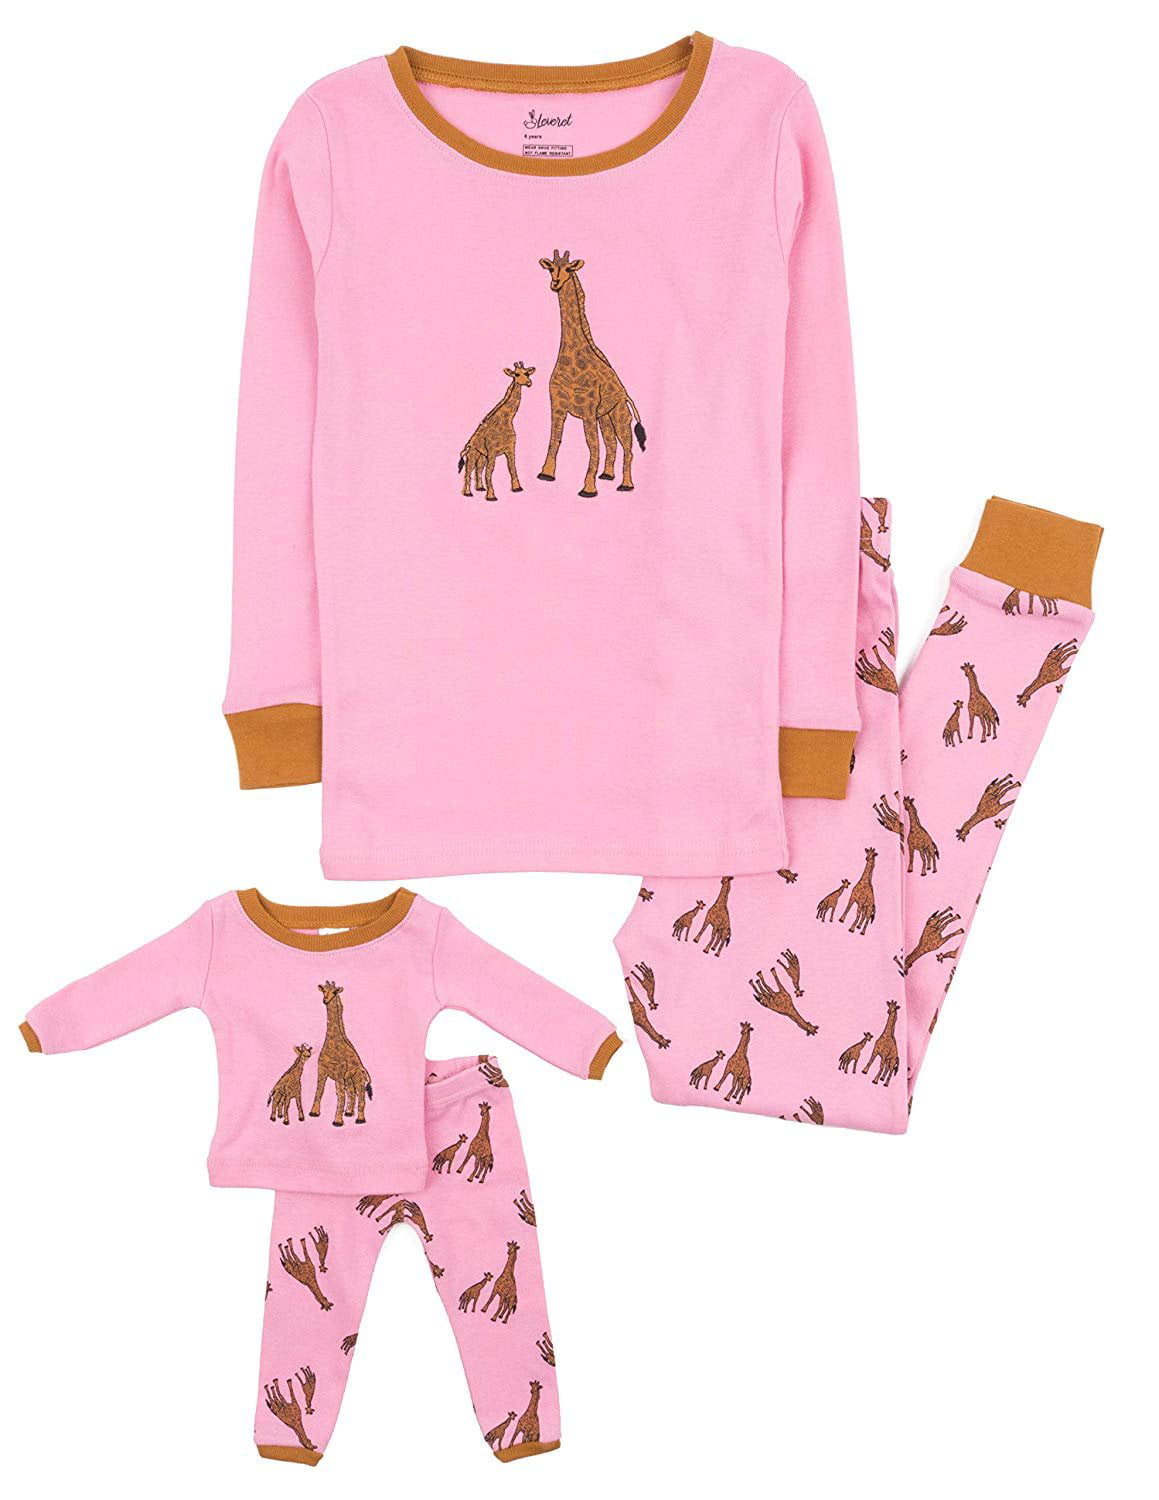 URMAGIC Baby Pyjamas Set Toddler Clothes Sleepwear Animal Printed Nightwear Kids Long Sleeve 2 Piece Outfit Gift